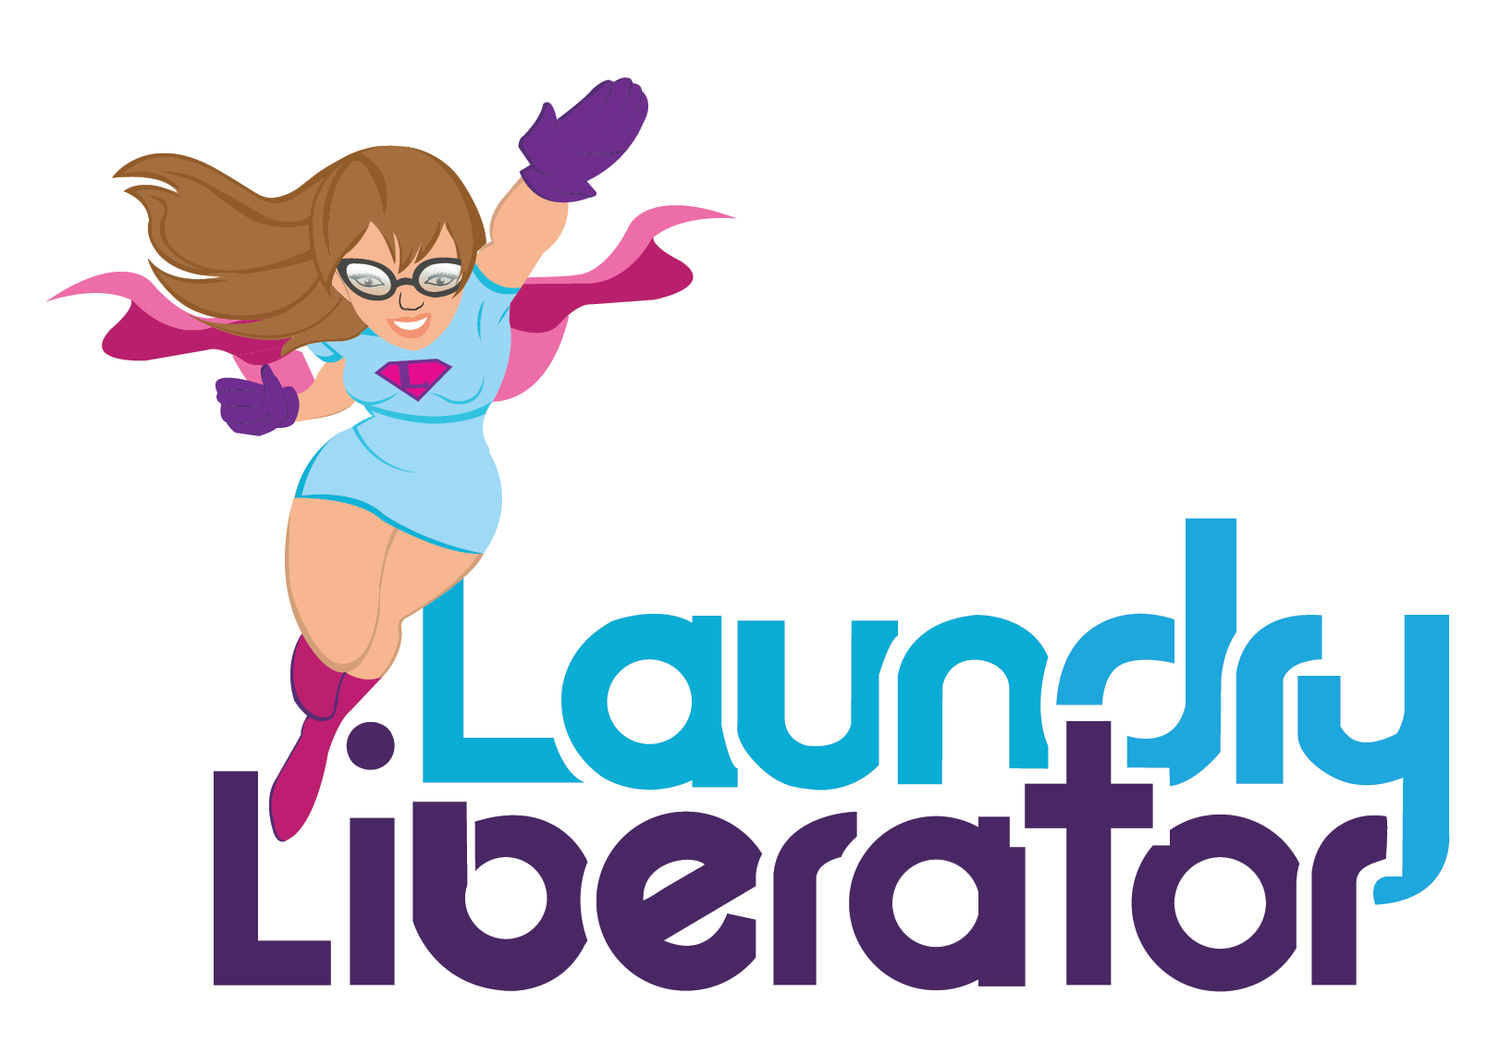 Laundry Liberator